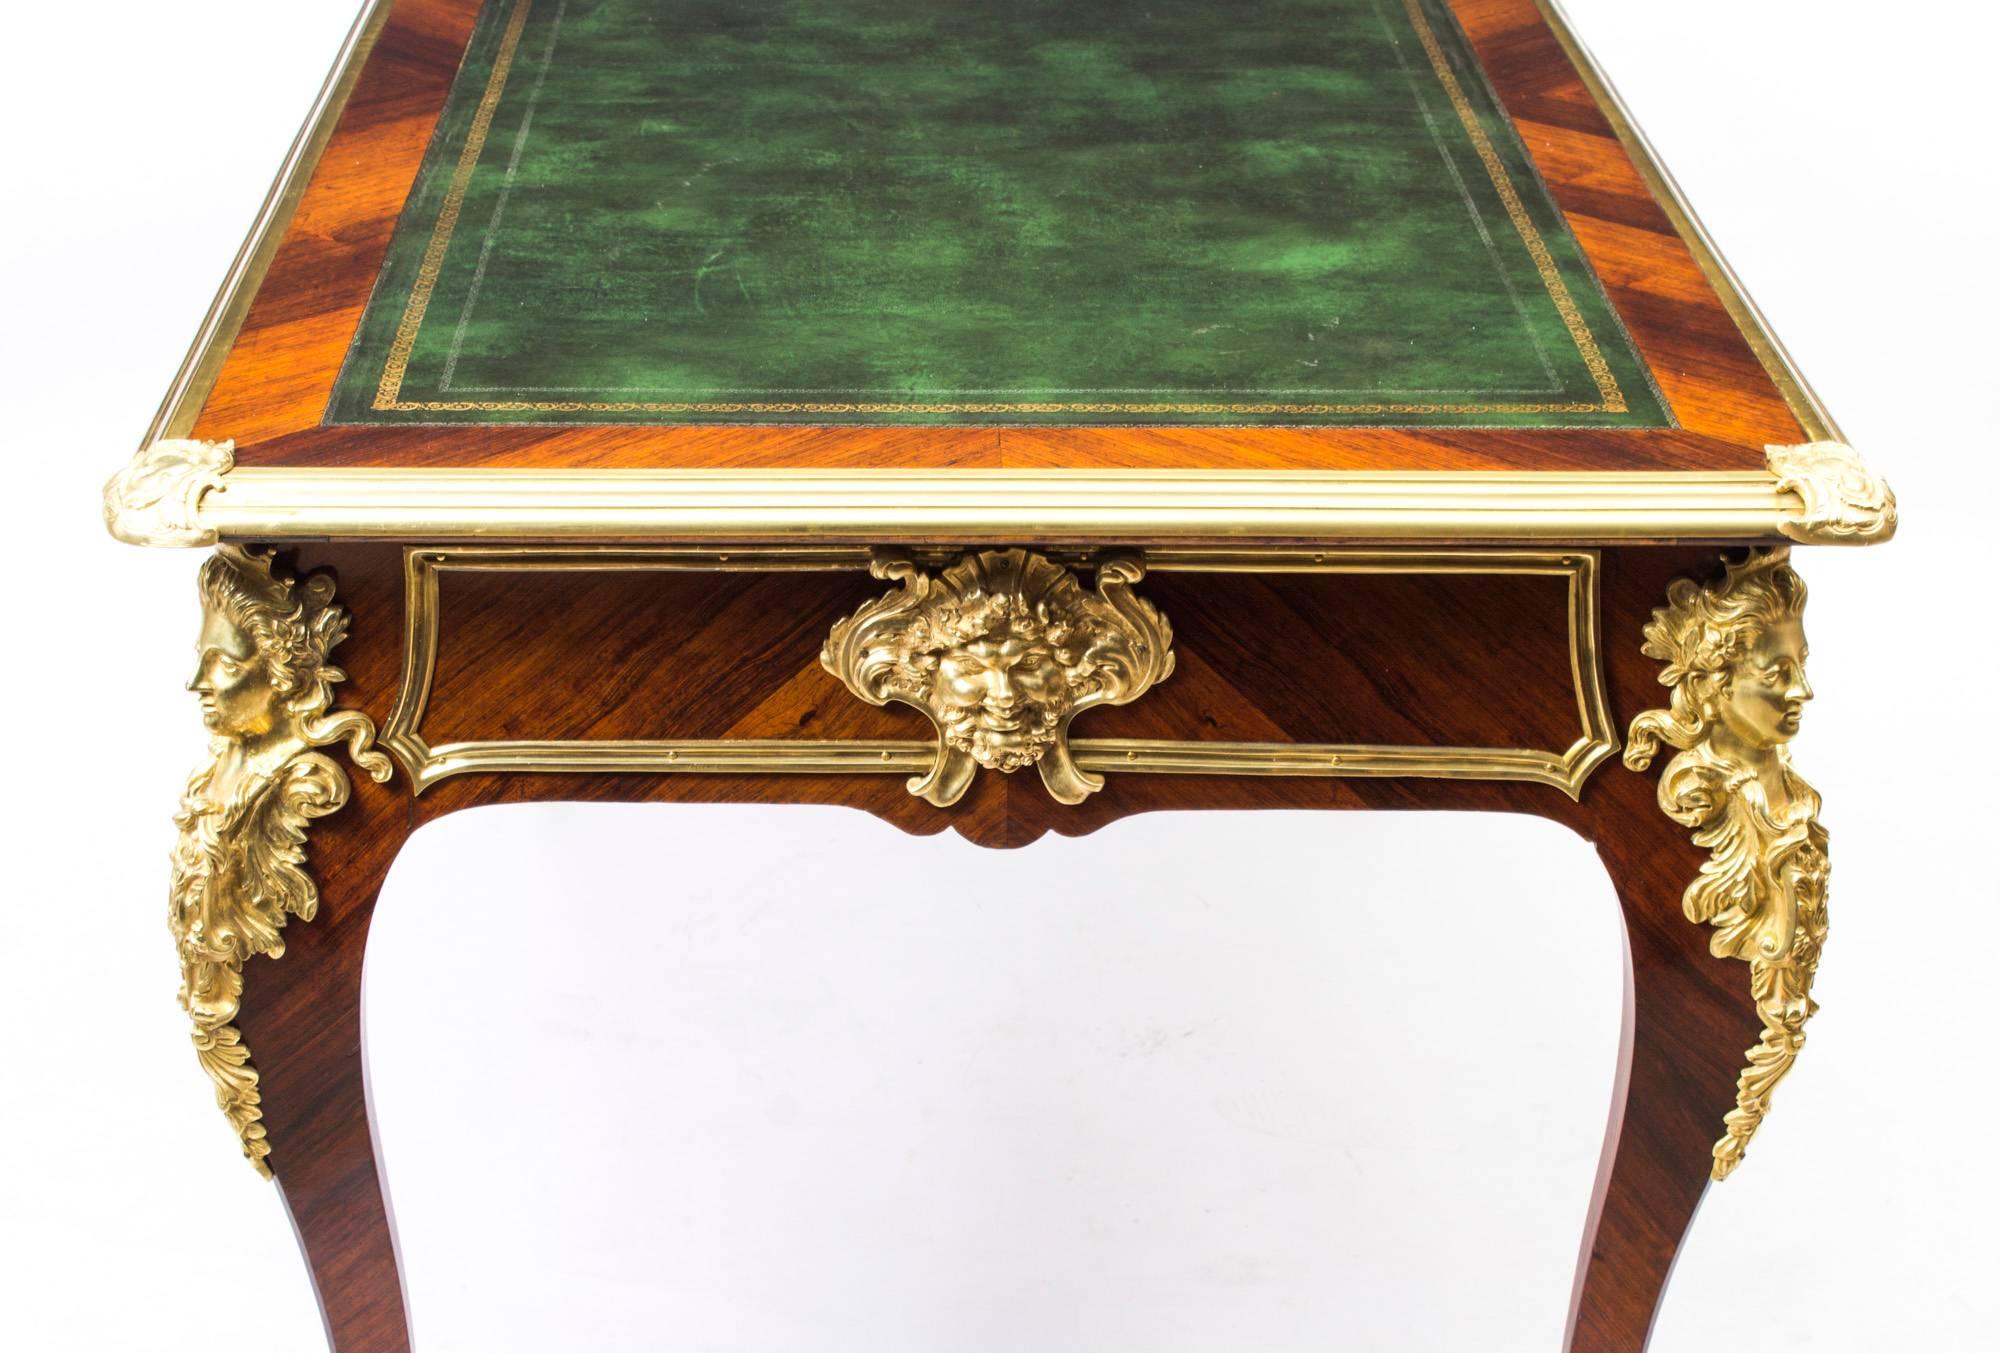 19th Century French Ormolu-Mounted Louis Revival Bureau Plat Desk 5